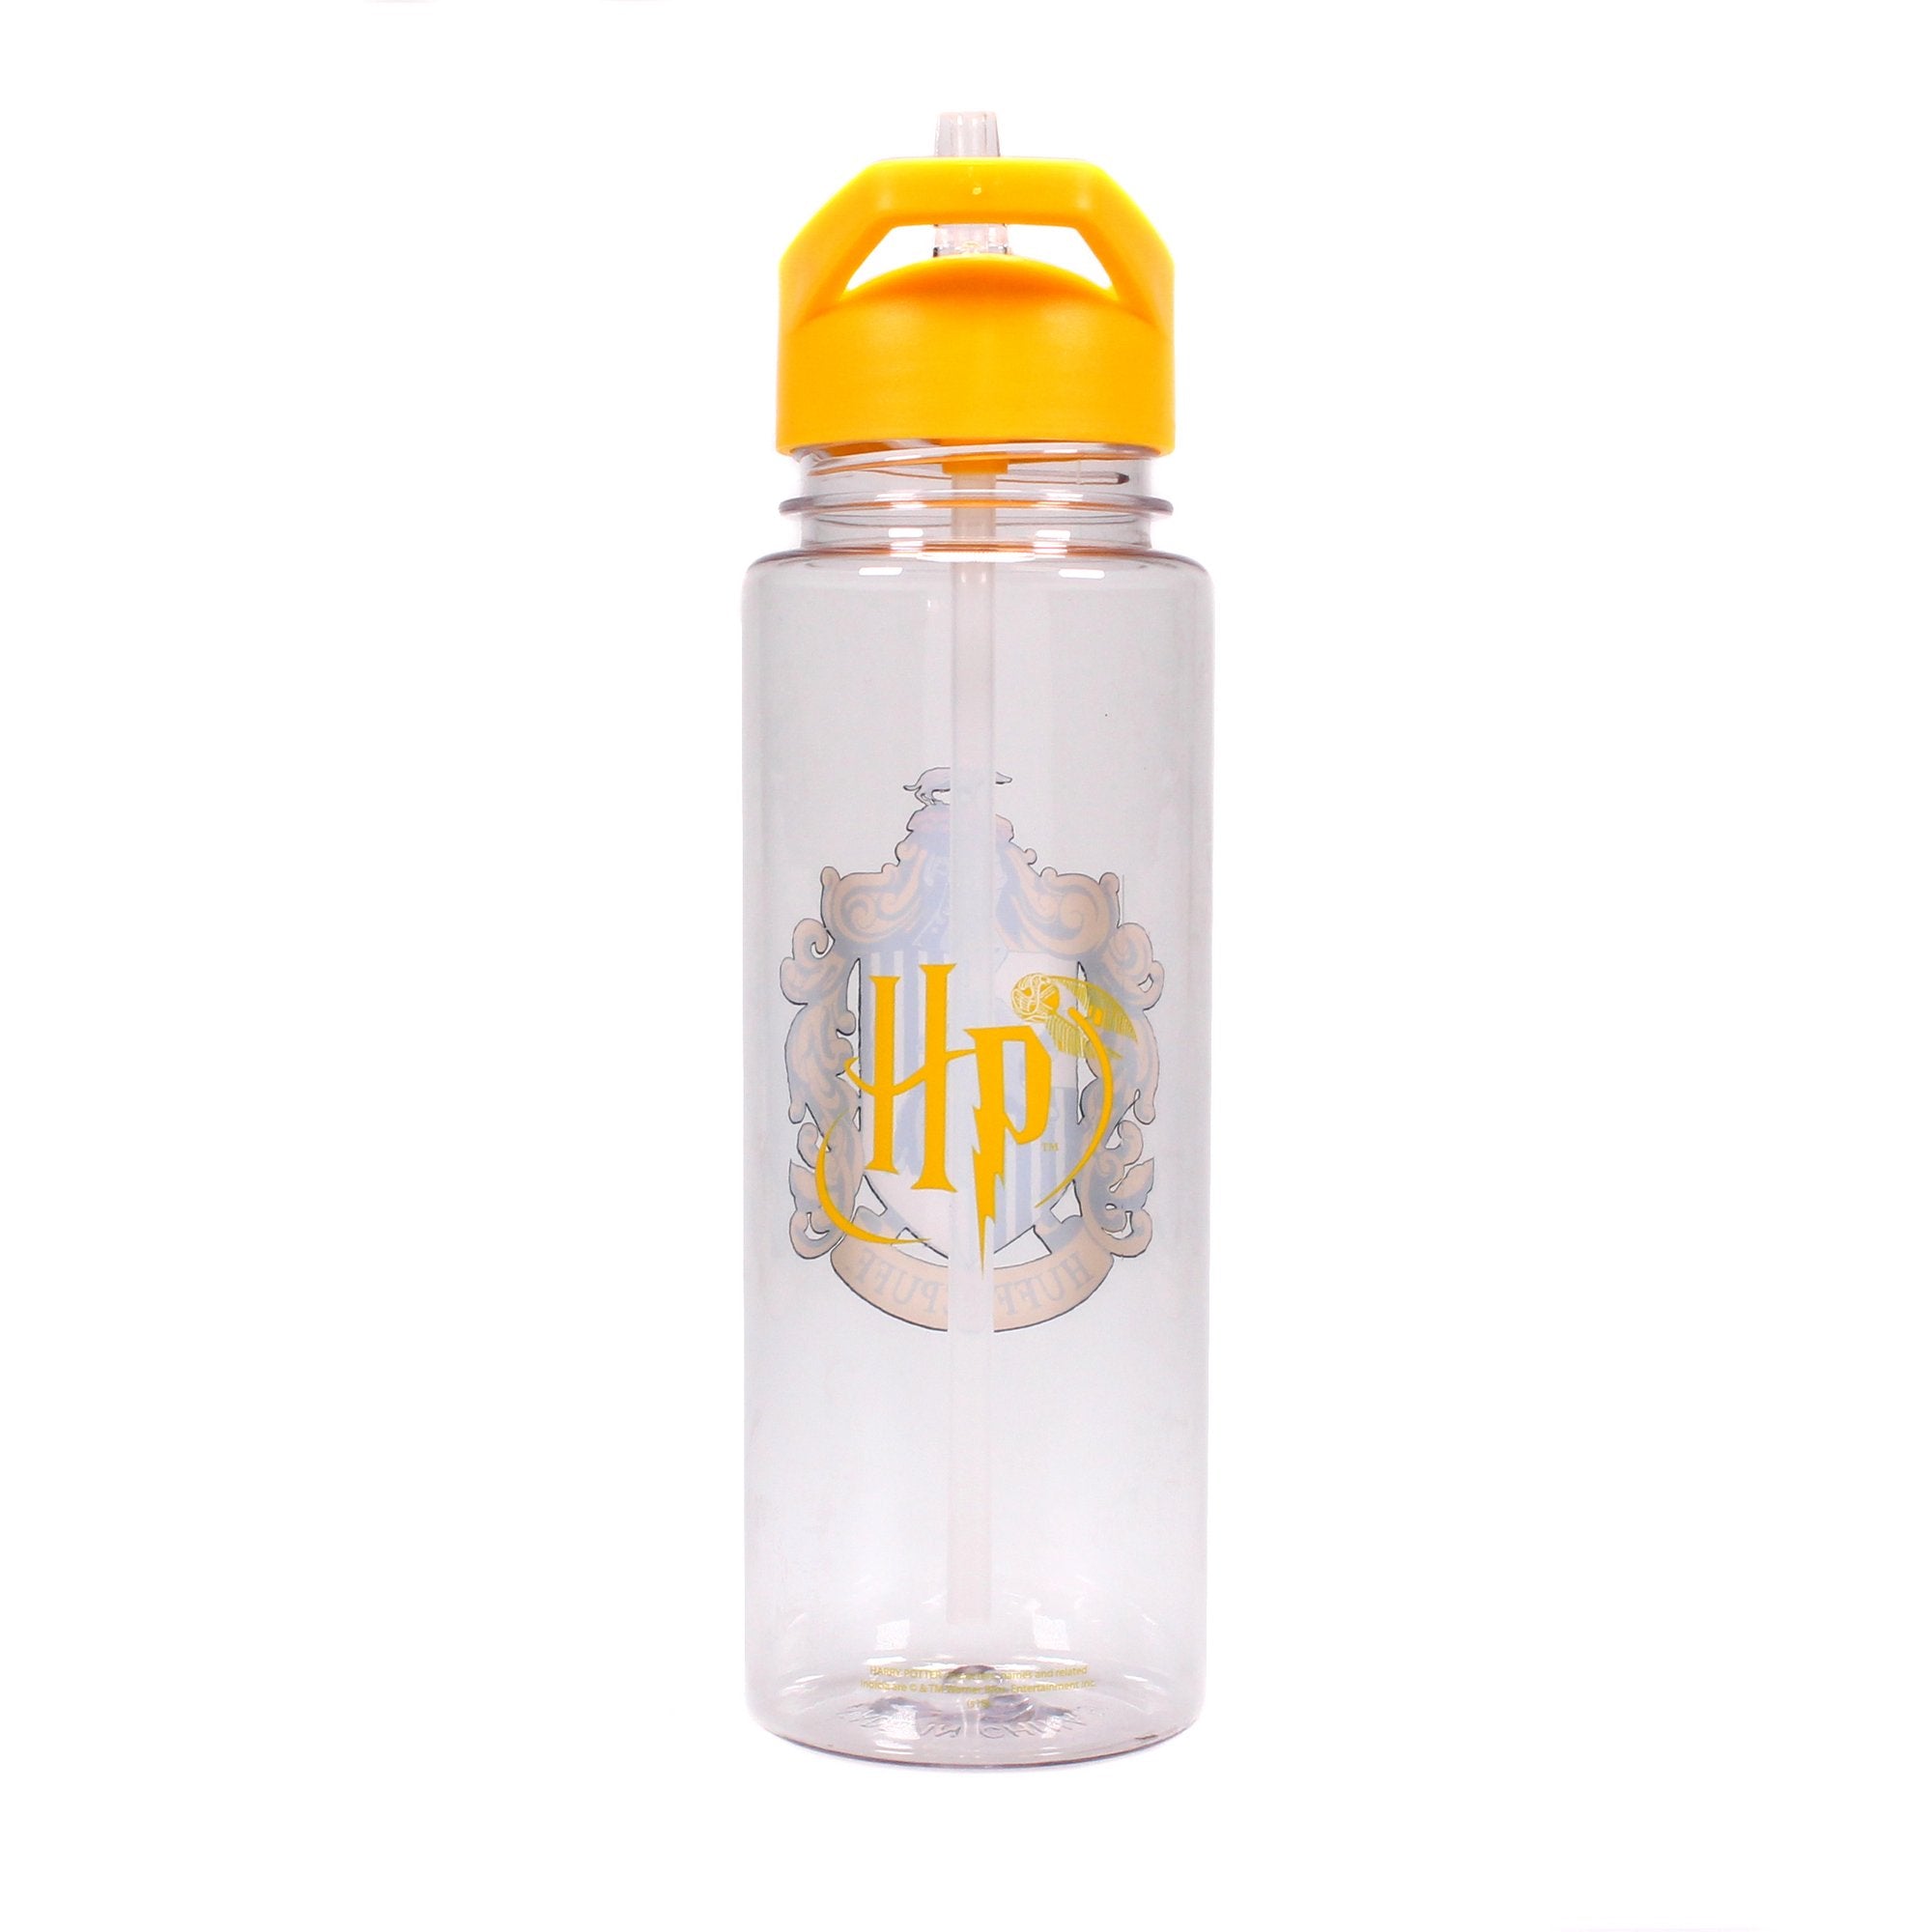 Harry Potter Water Bottle - Hufflepuff Crest